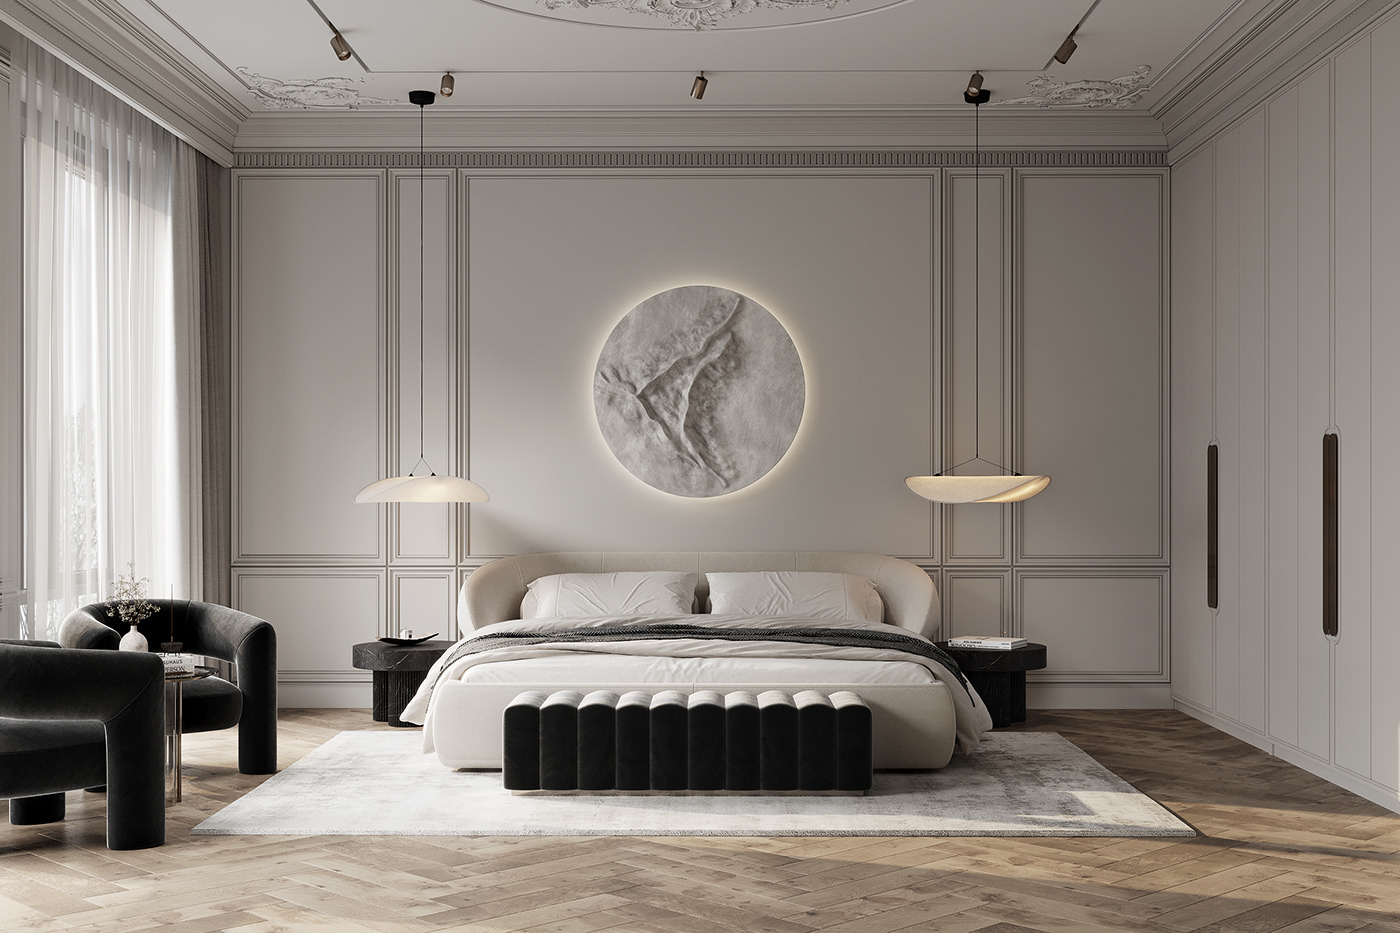 3D 3ds max architecture corona Interior interior design  Render visualization мастерспальня спальня